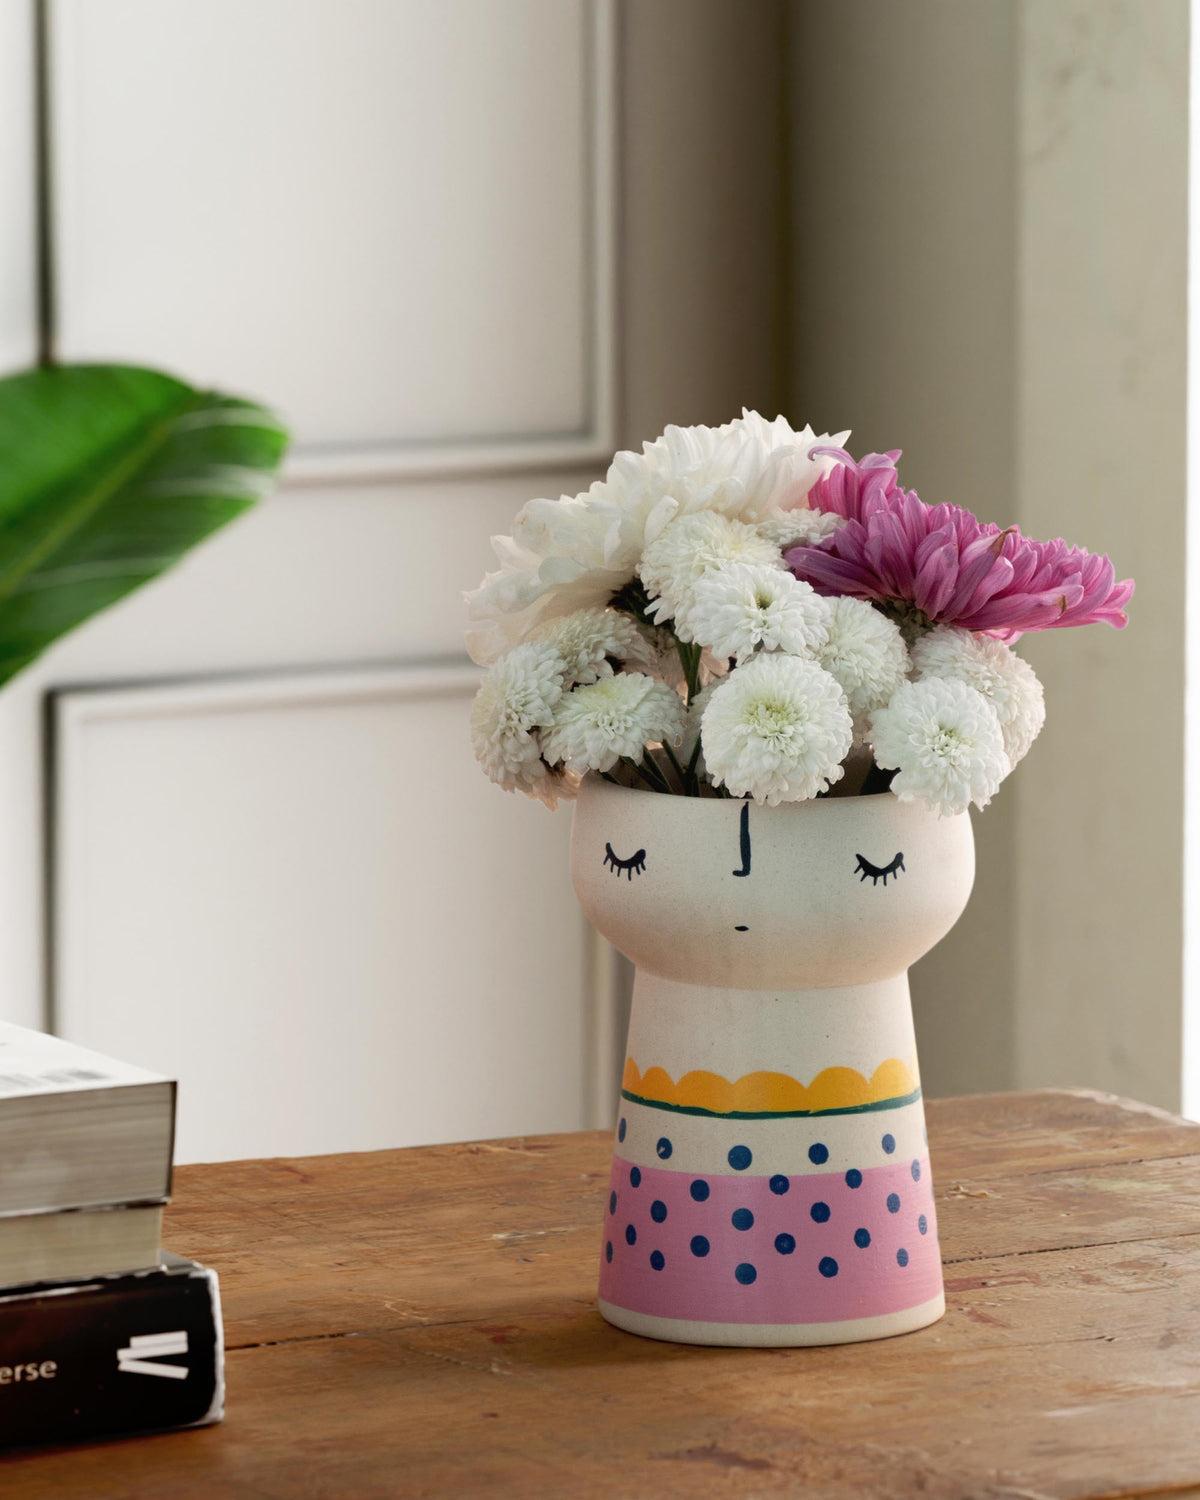 White Ceramic Flower Vase with Pink Block & Yellow Edge 5x4